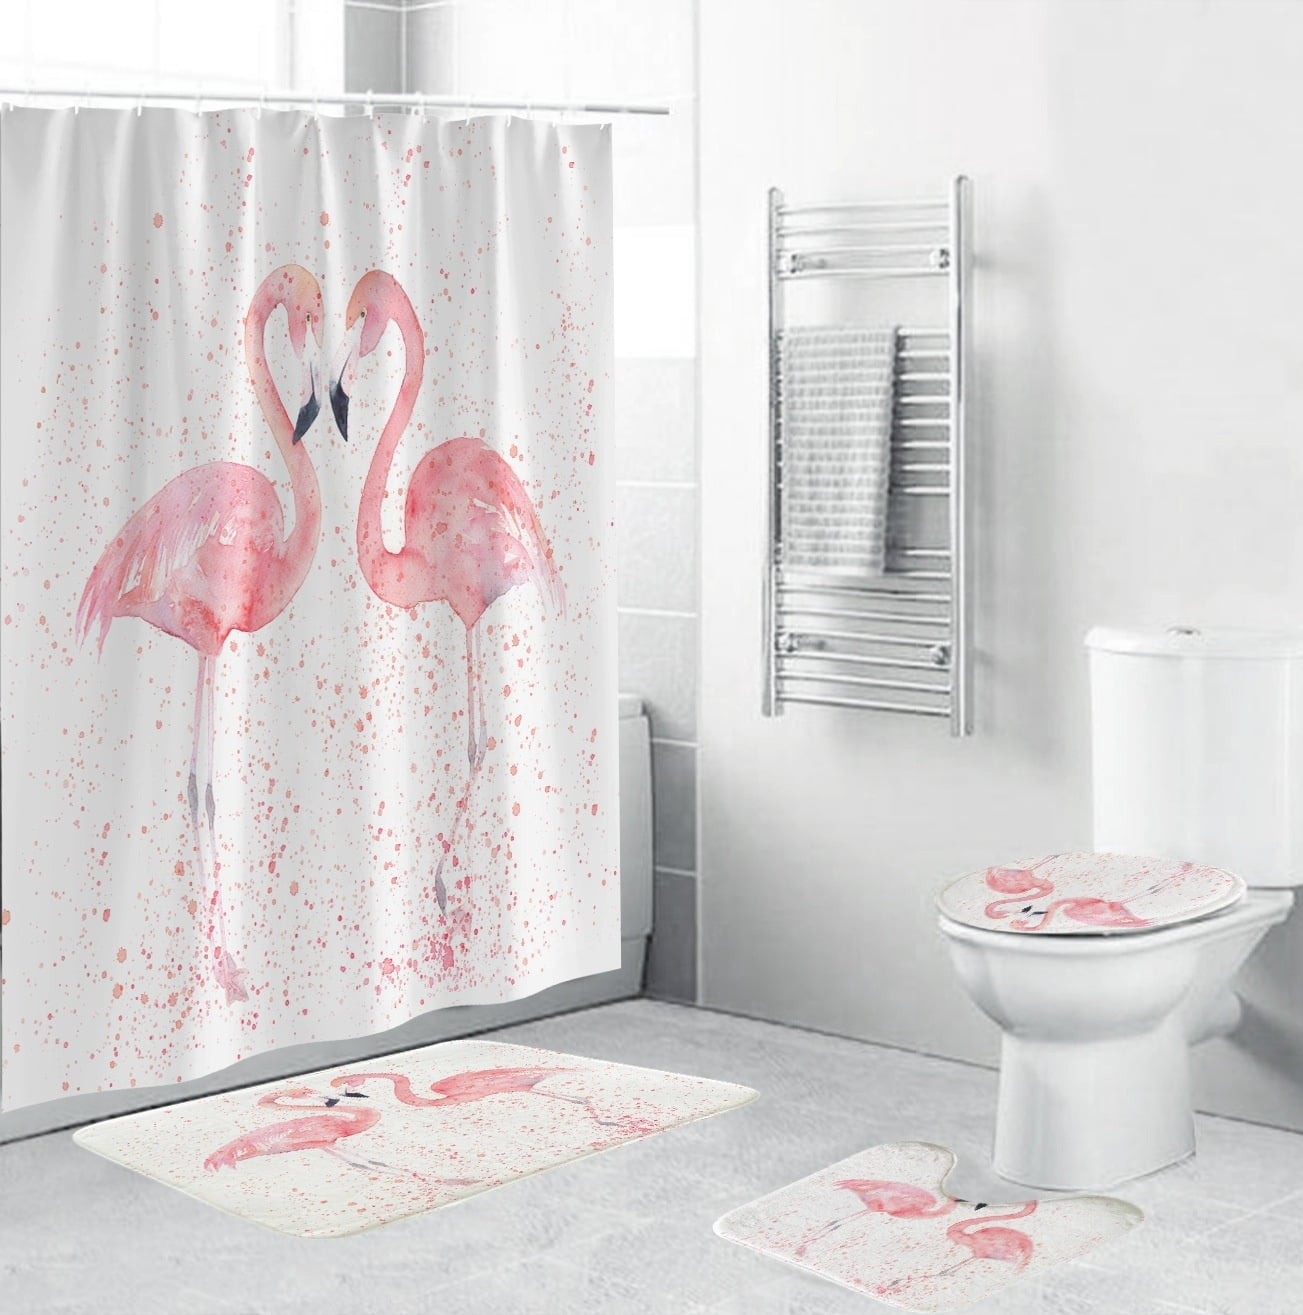 Valentine's Day Flamingo Heart Bathroom Decor Fabric Shower Curtain Set 71Inch 